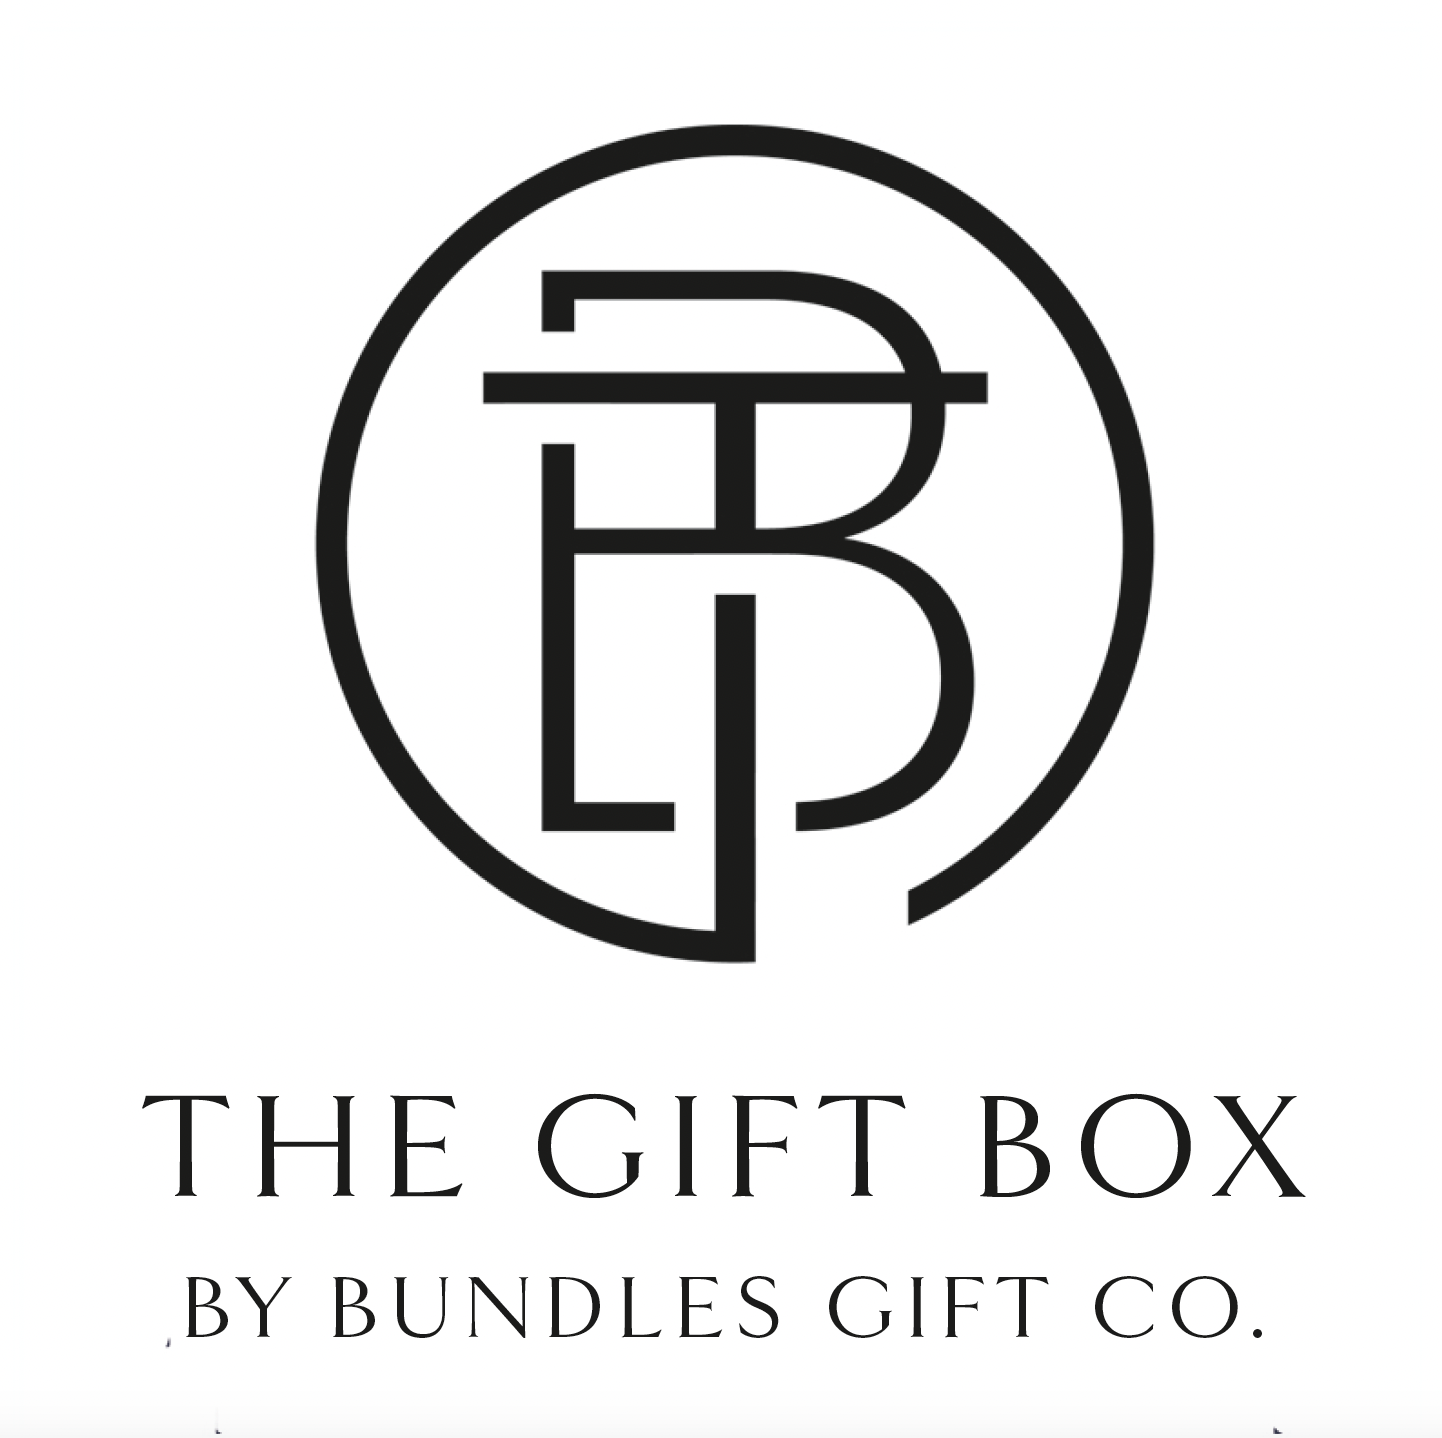 The Gift Box By Bundles Gift Co. logo